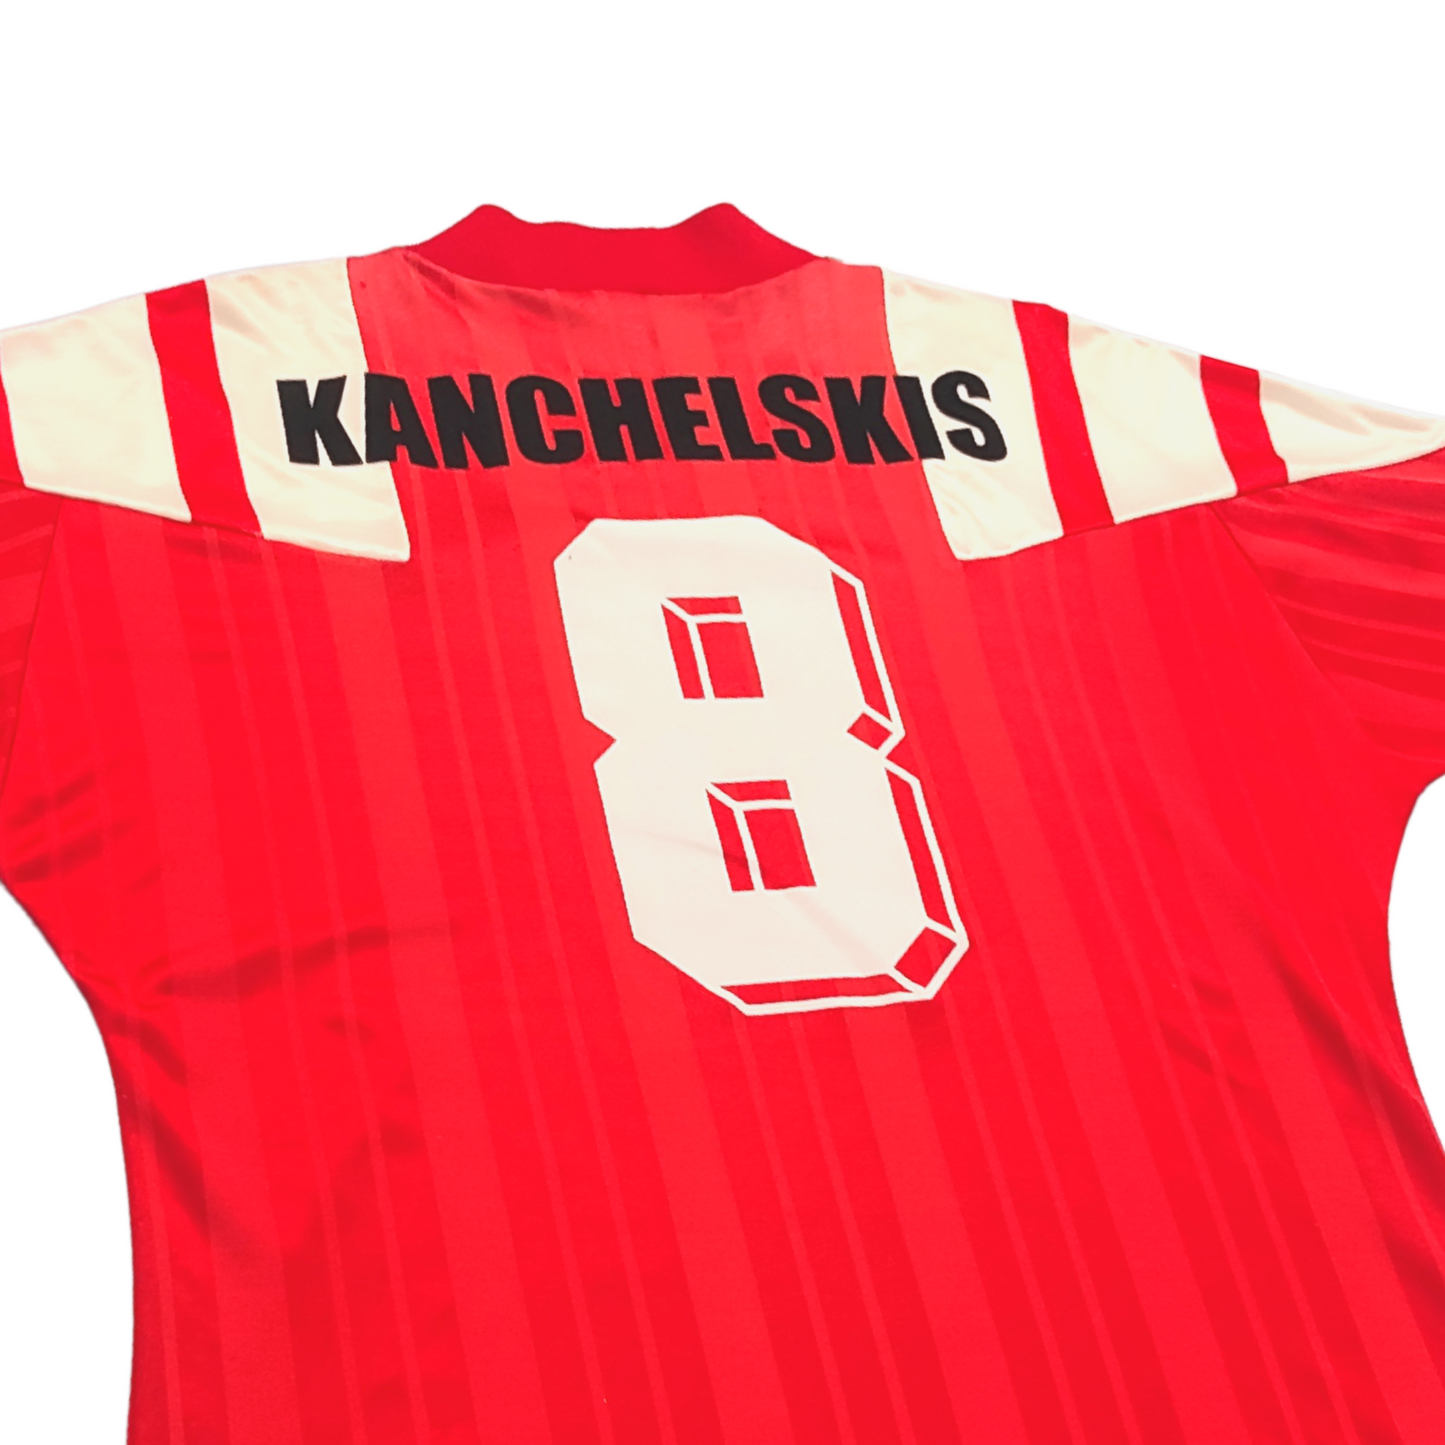 CIS Home Shirt Euro 1992 Kanchelkis (L)